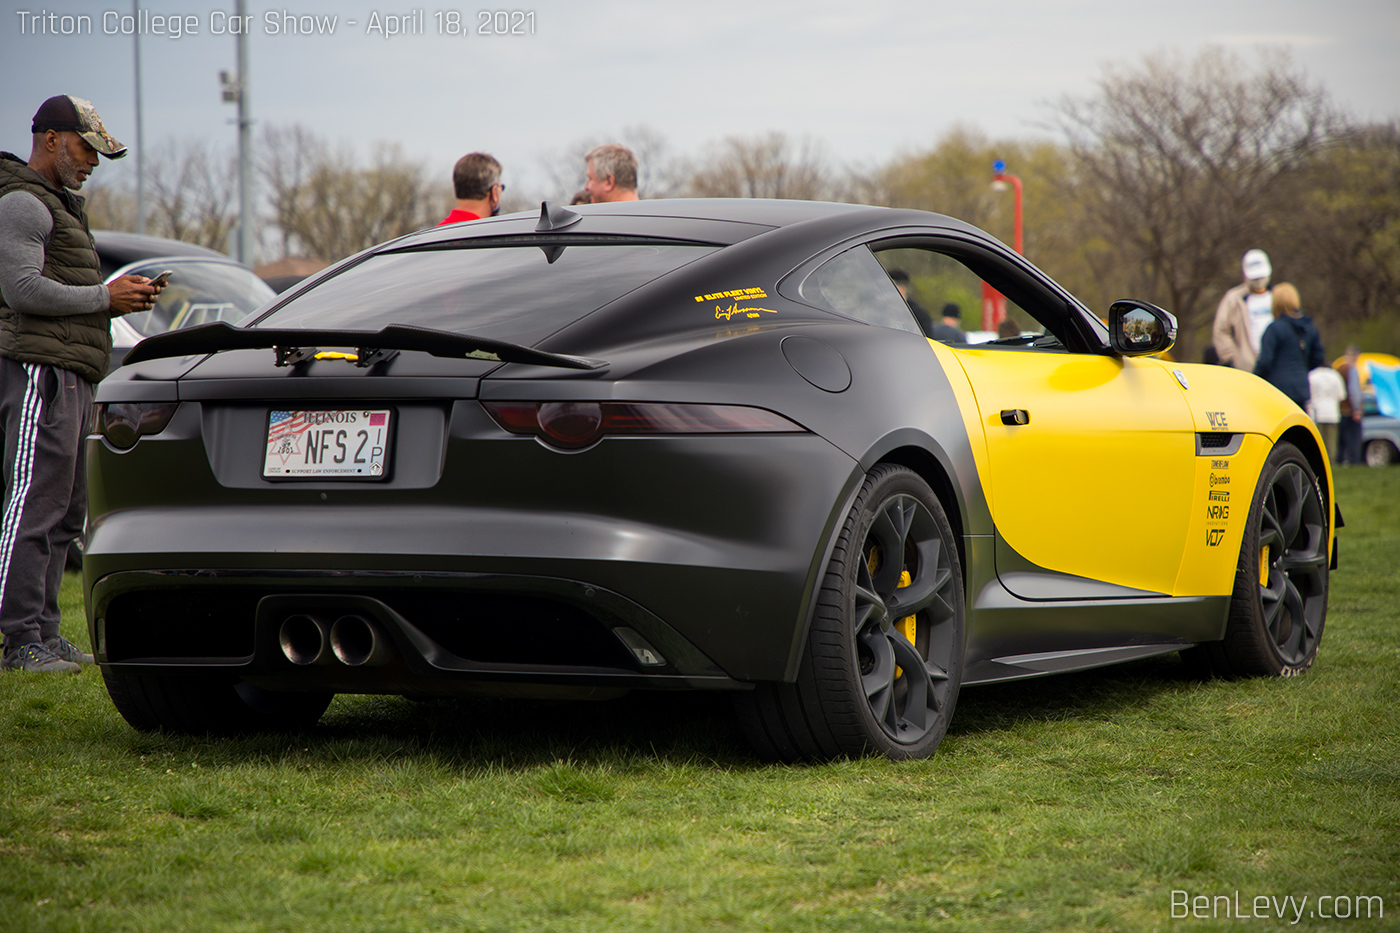 Black and Yellow Jaguar F-Type S